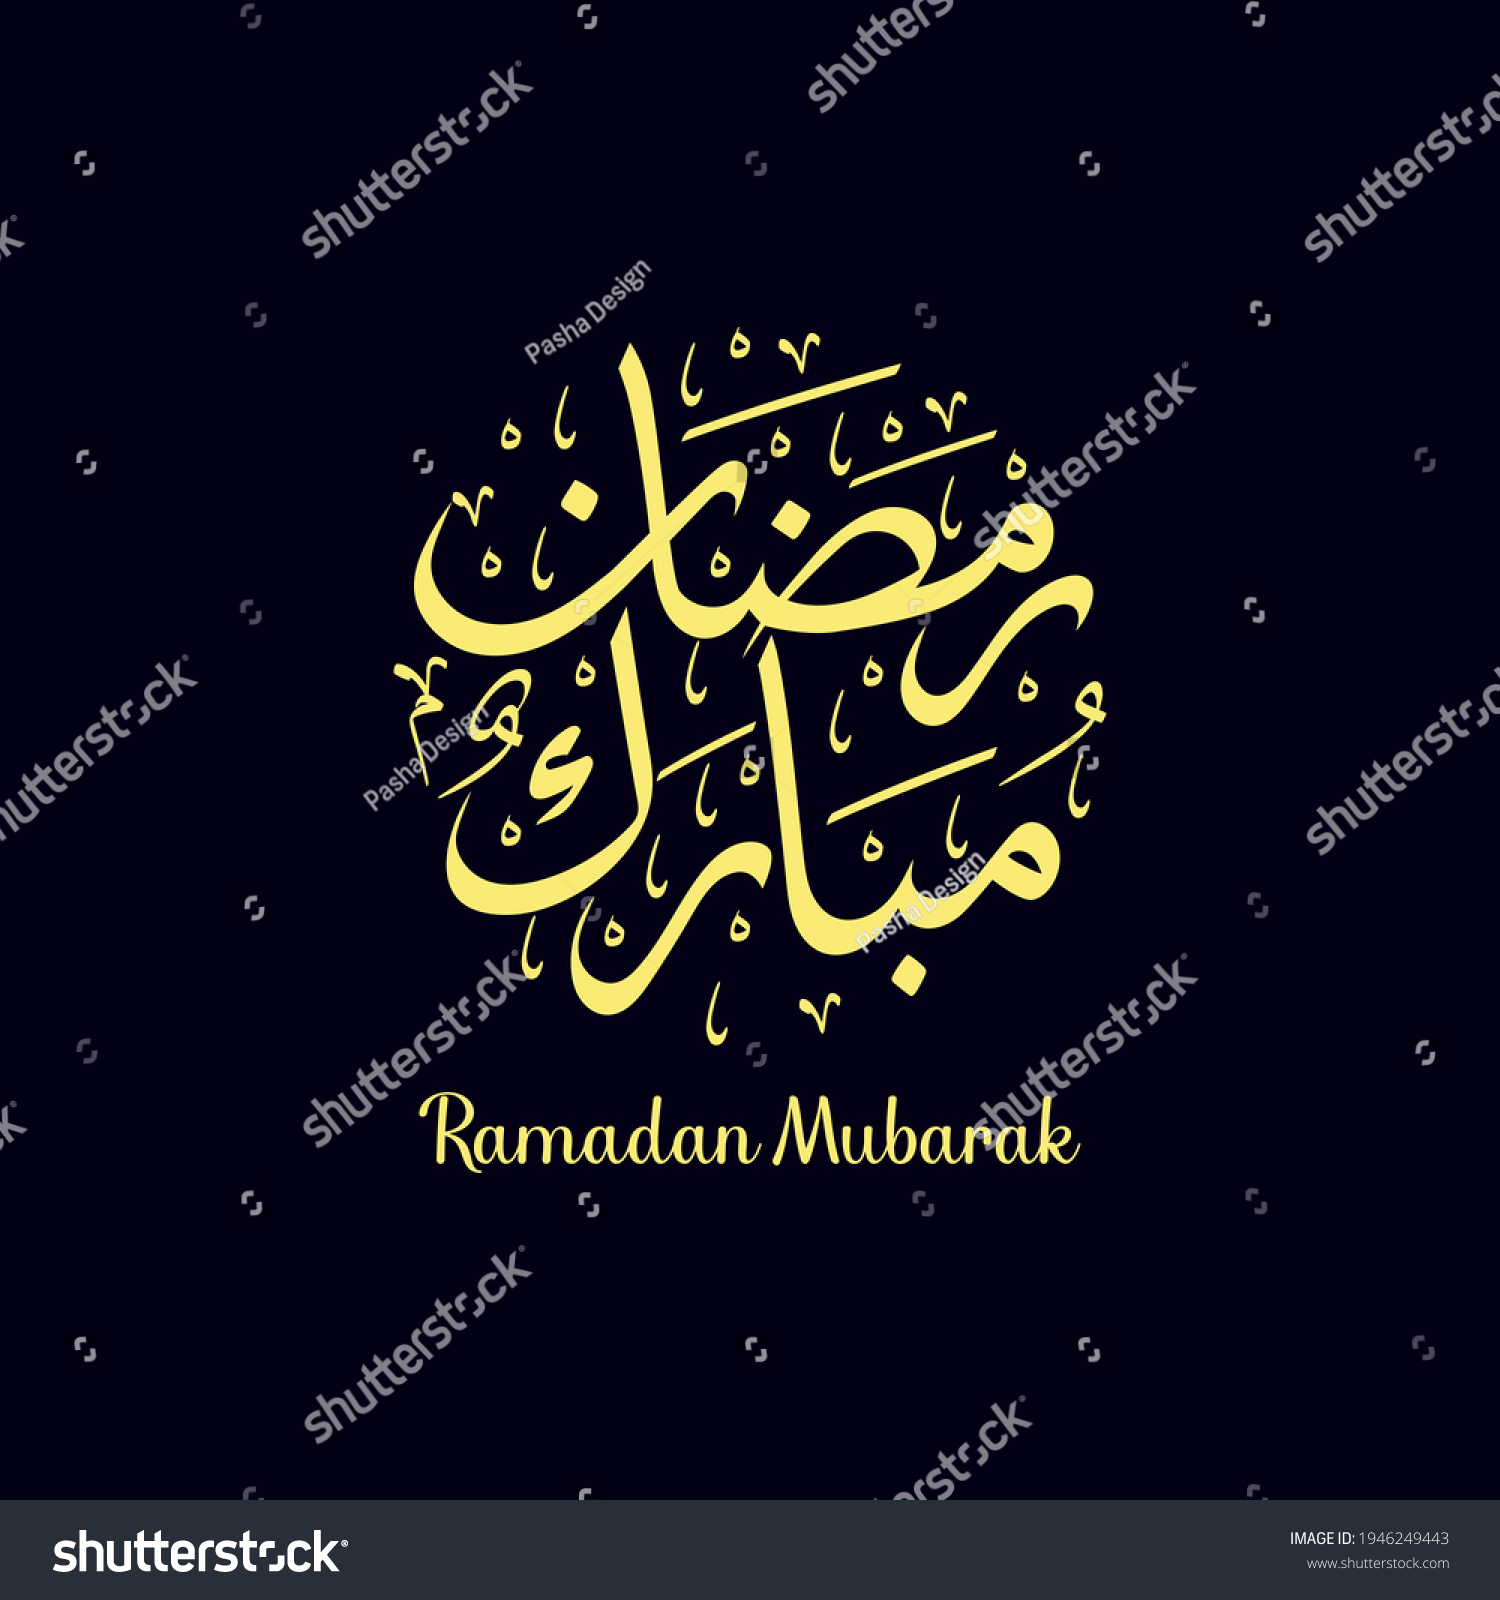 Ramadan Mubarak Beautiful Design with circle shape Arabic Calligraphy and blue dark background. The text translation is Blessed Ramadan. #1946249443